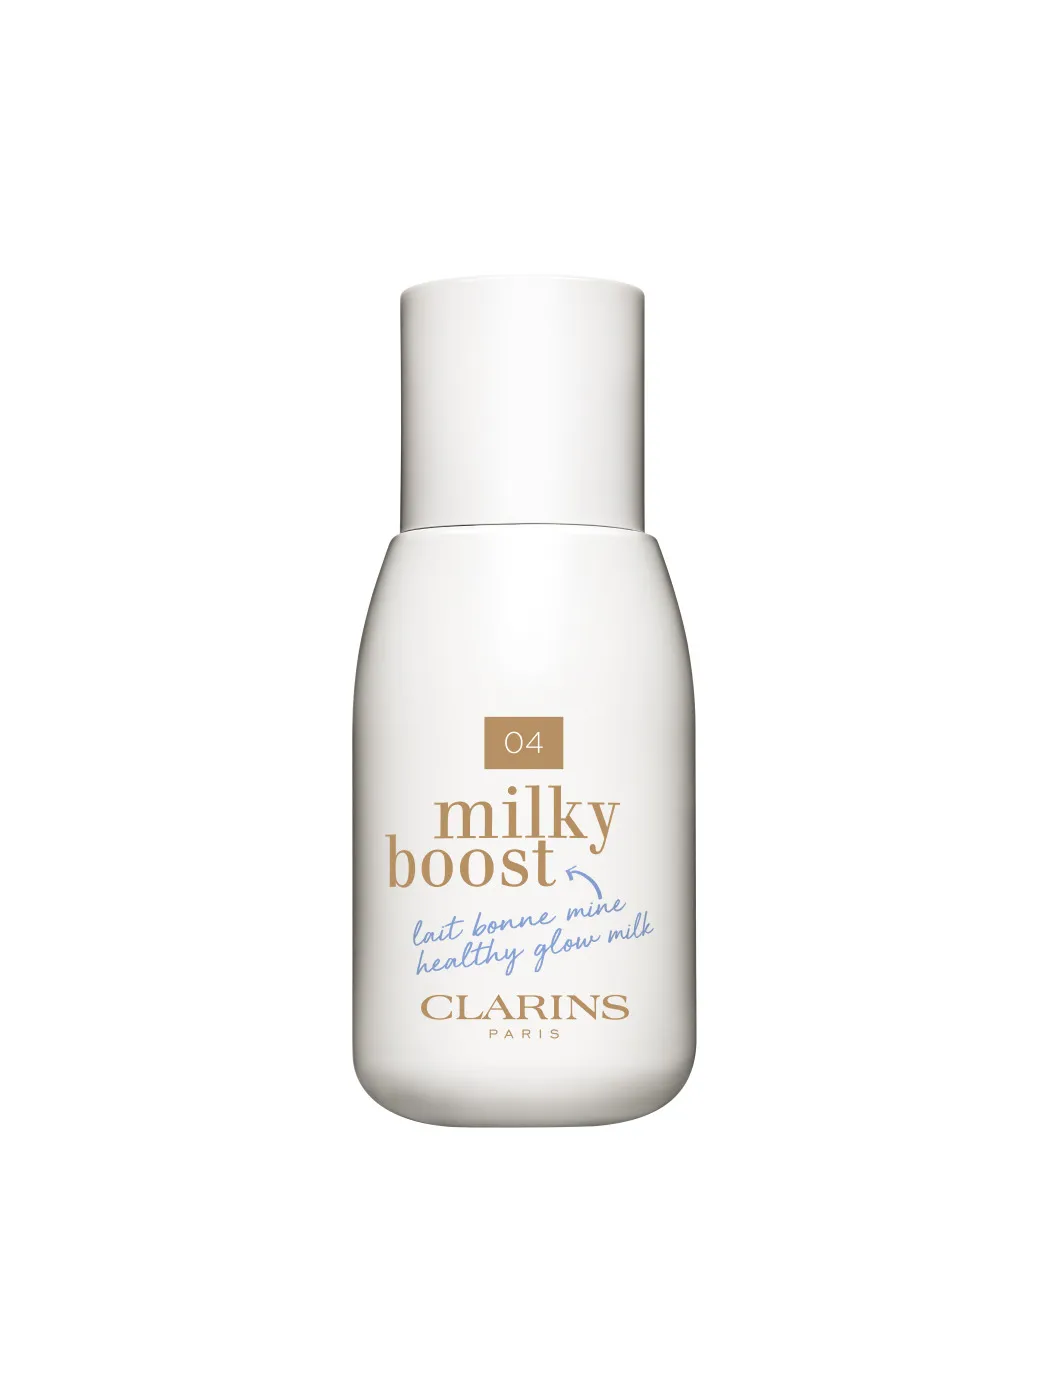 Clarins Milky Boost Skin Perfecting Milk